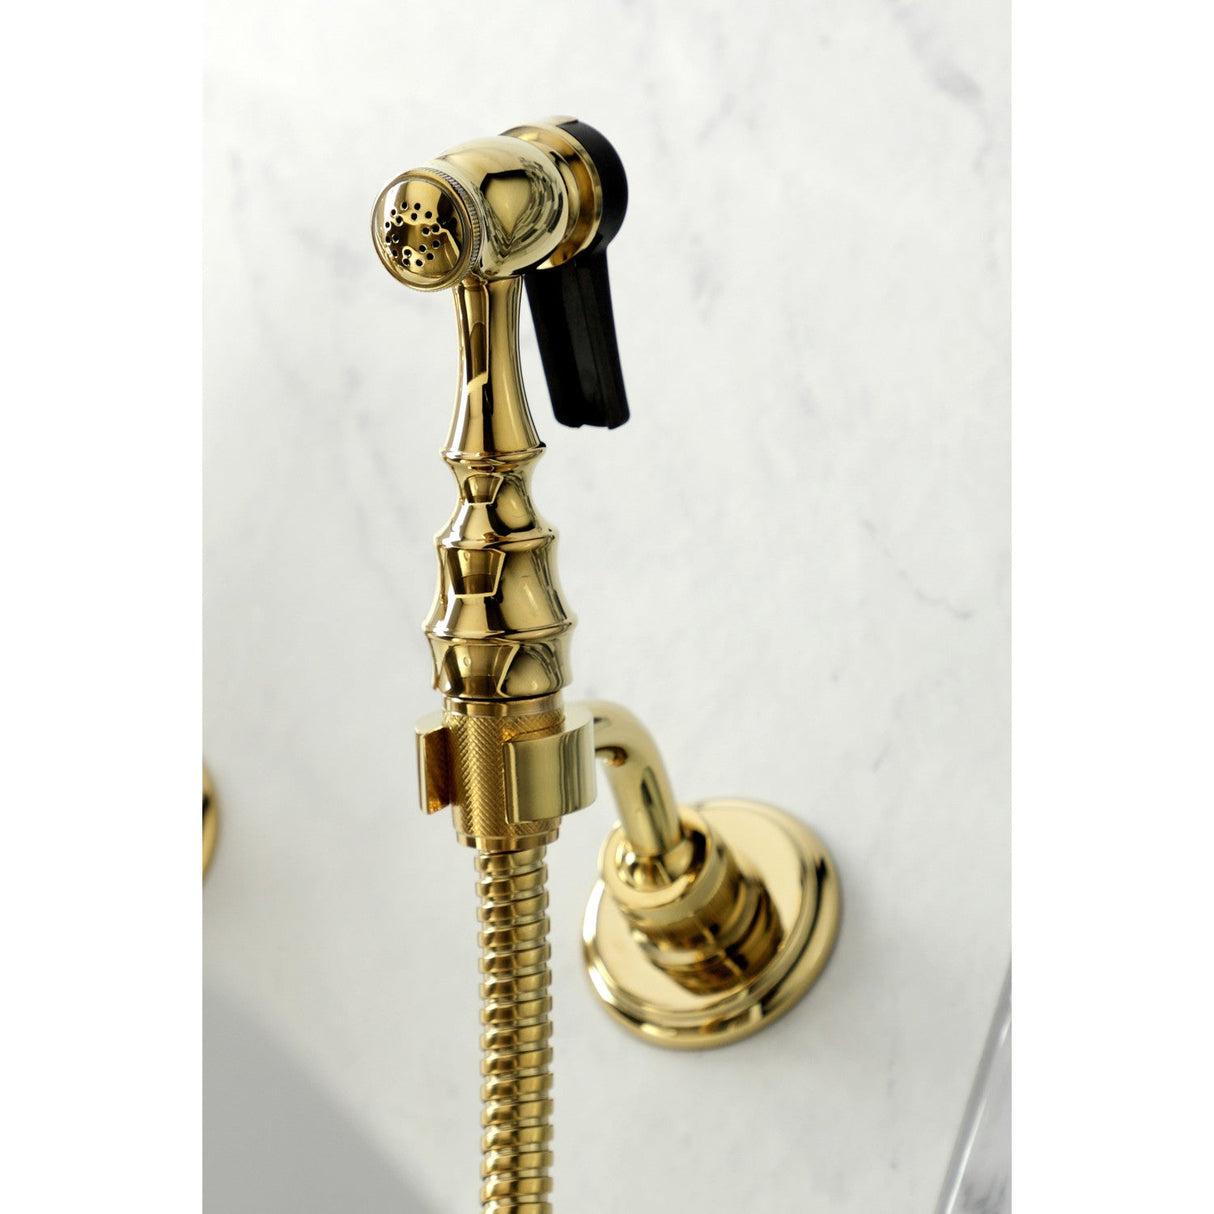 Duchess KS1262PKLBS Two-Handle 2-Hole Wall Mount Bridge Kitchen Faucet with Brass Sprayer, Polished Brass